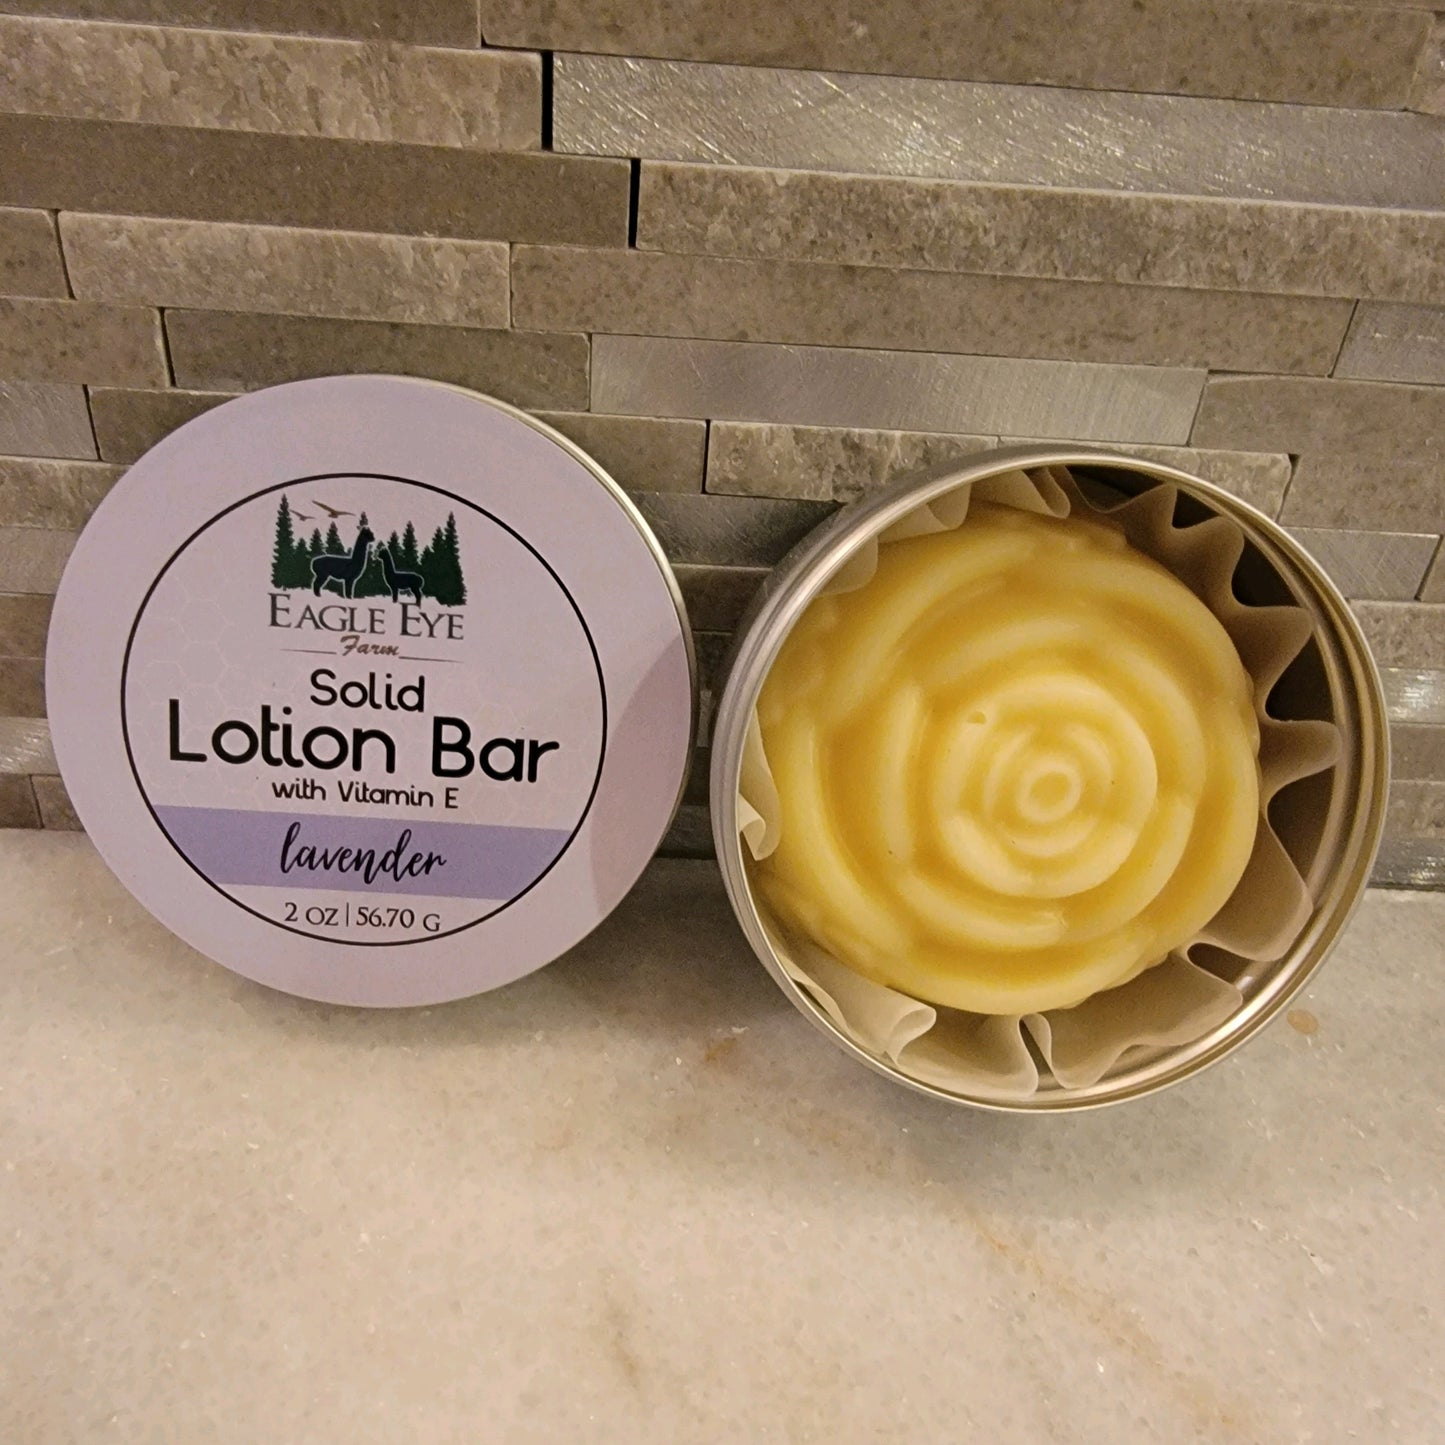 Solid Lotion Bar lavender